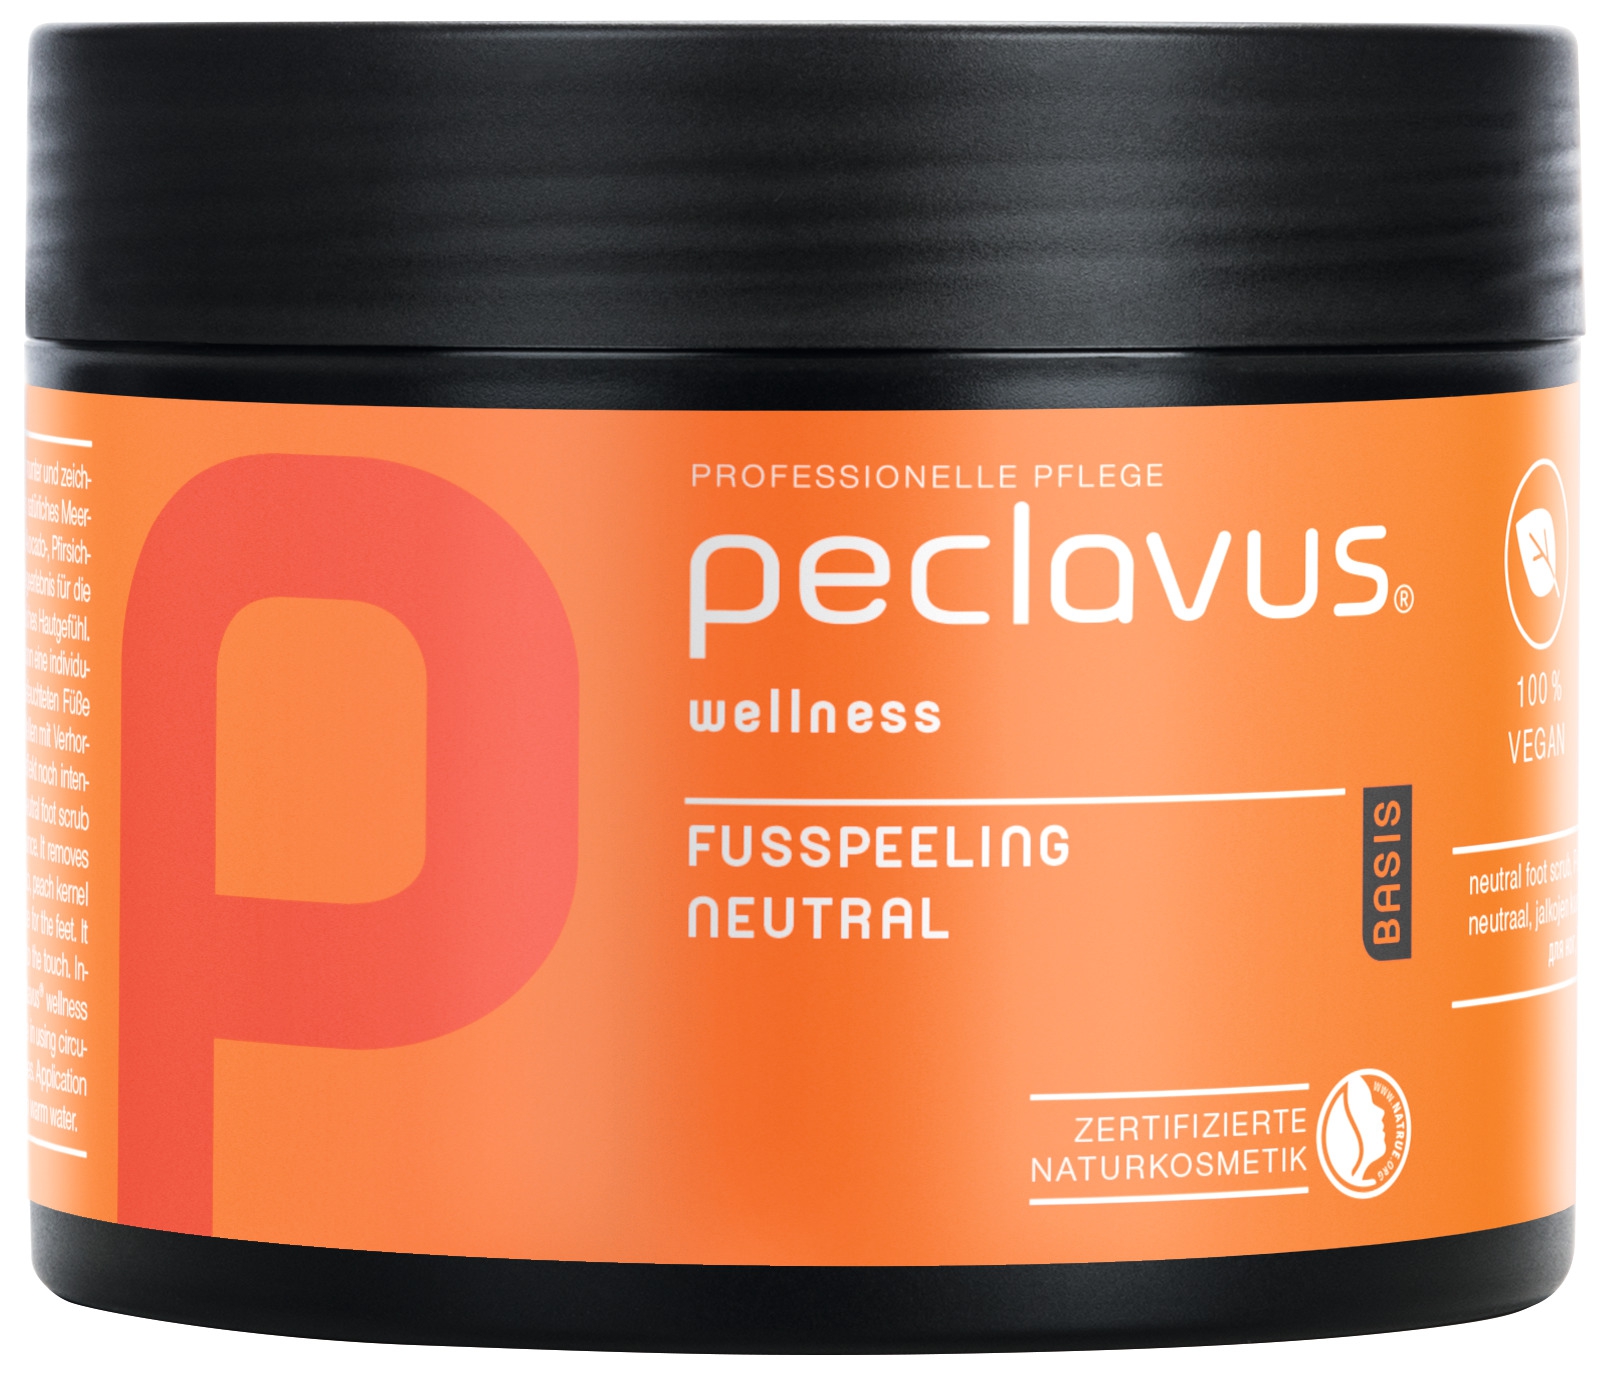 PECLAVUS wellness Fusspeeling Neutral | Basis 600 g